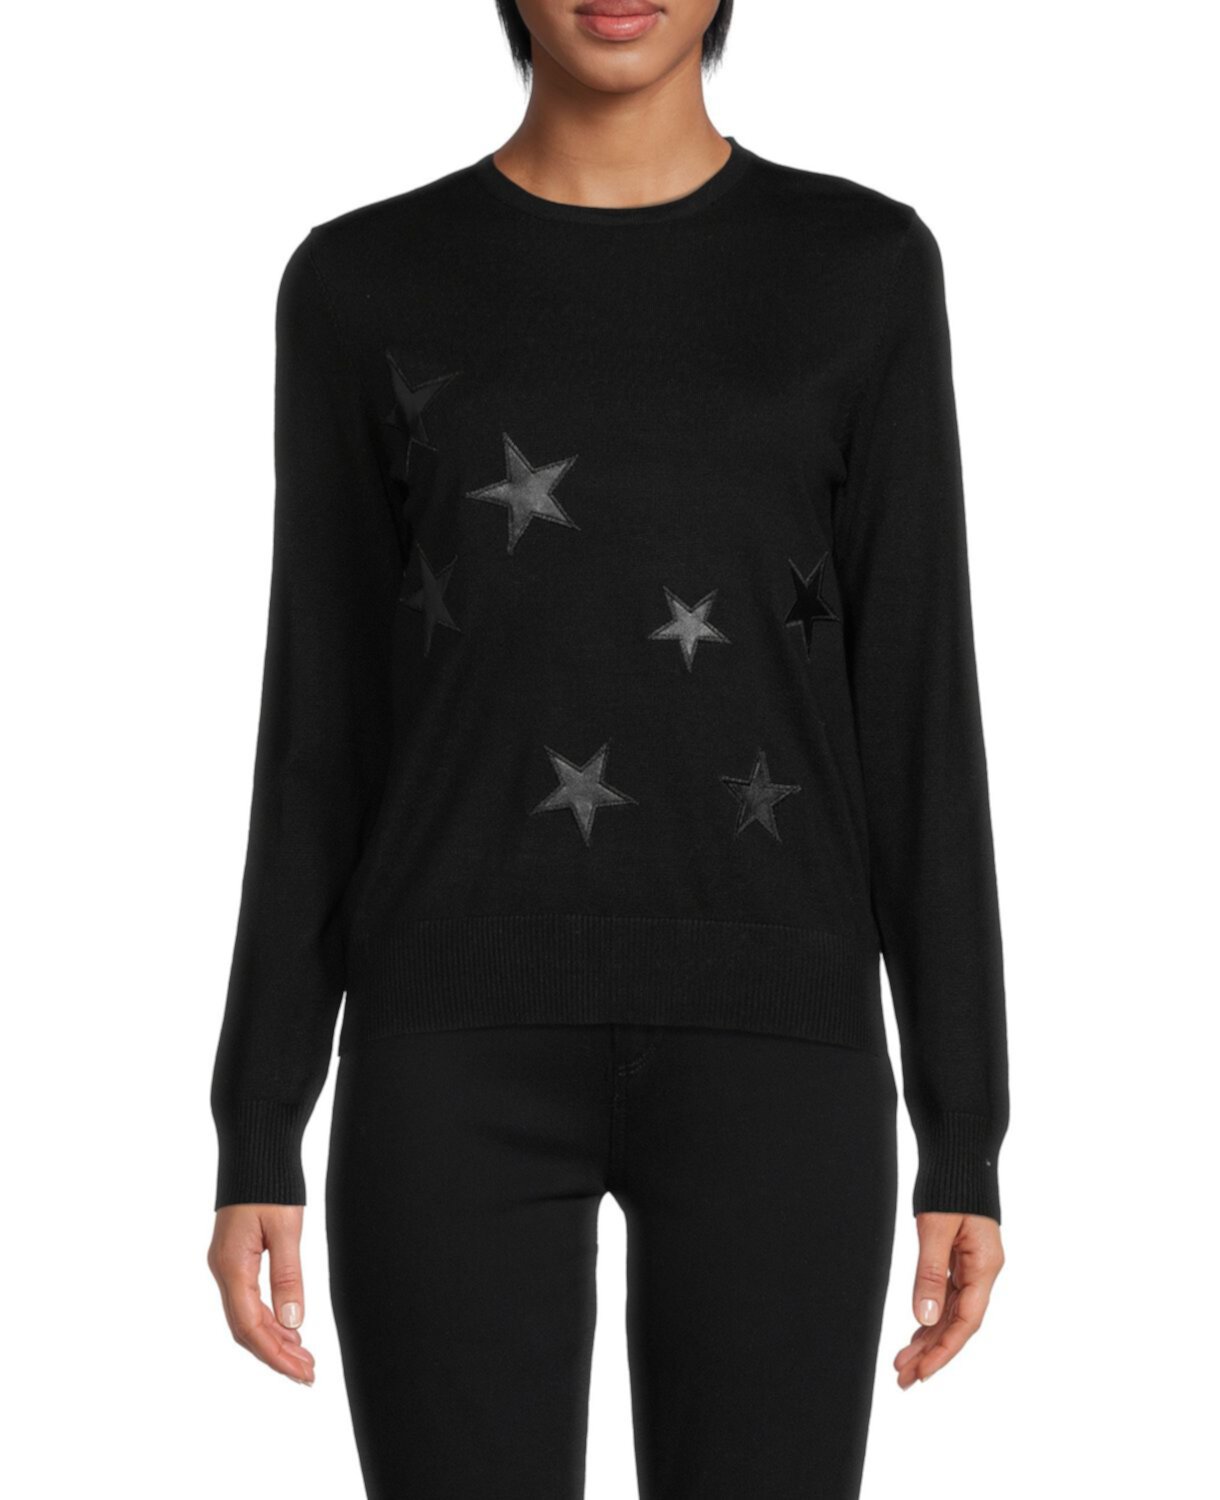 Star Crewneck Sweater YAL New York